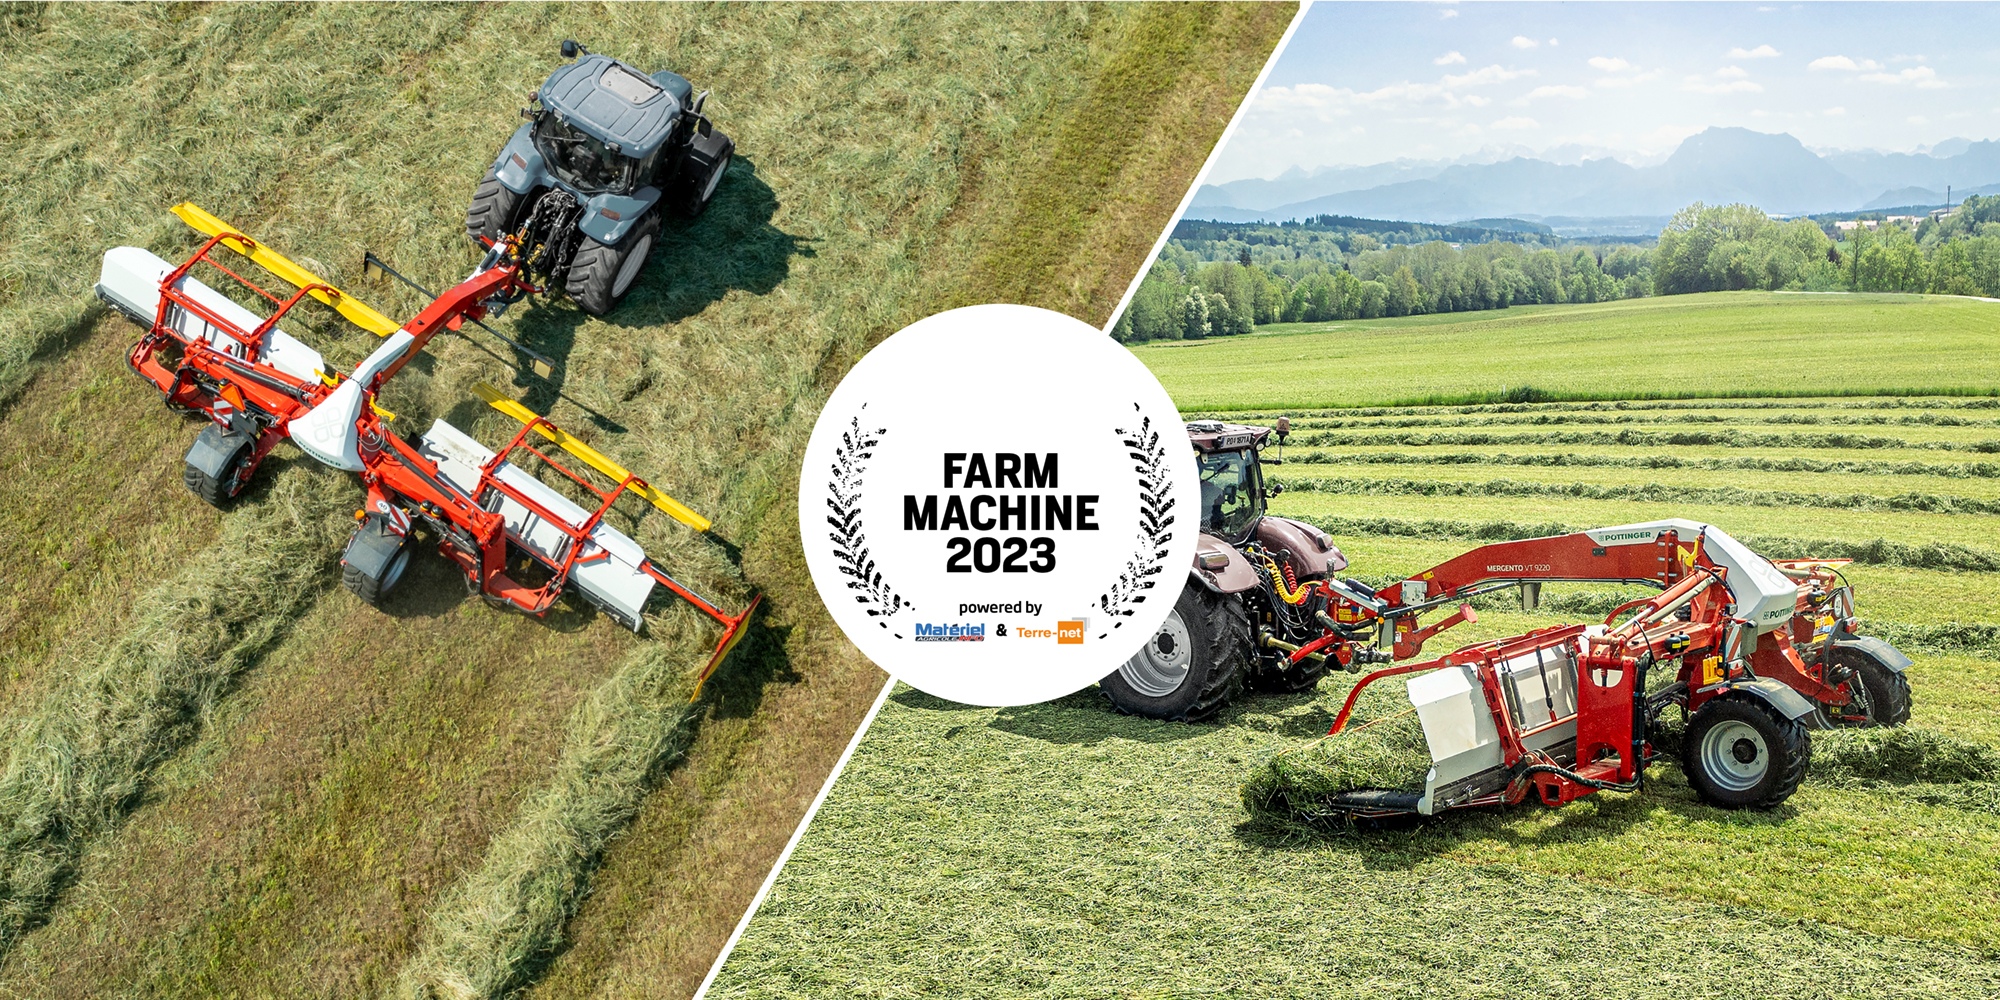 FARM MACHINE 2023 for MERGENTO VT 9220